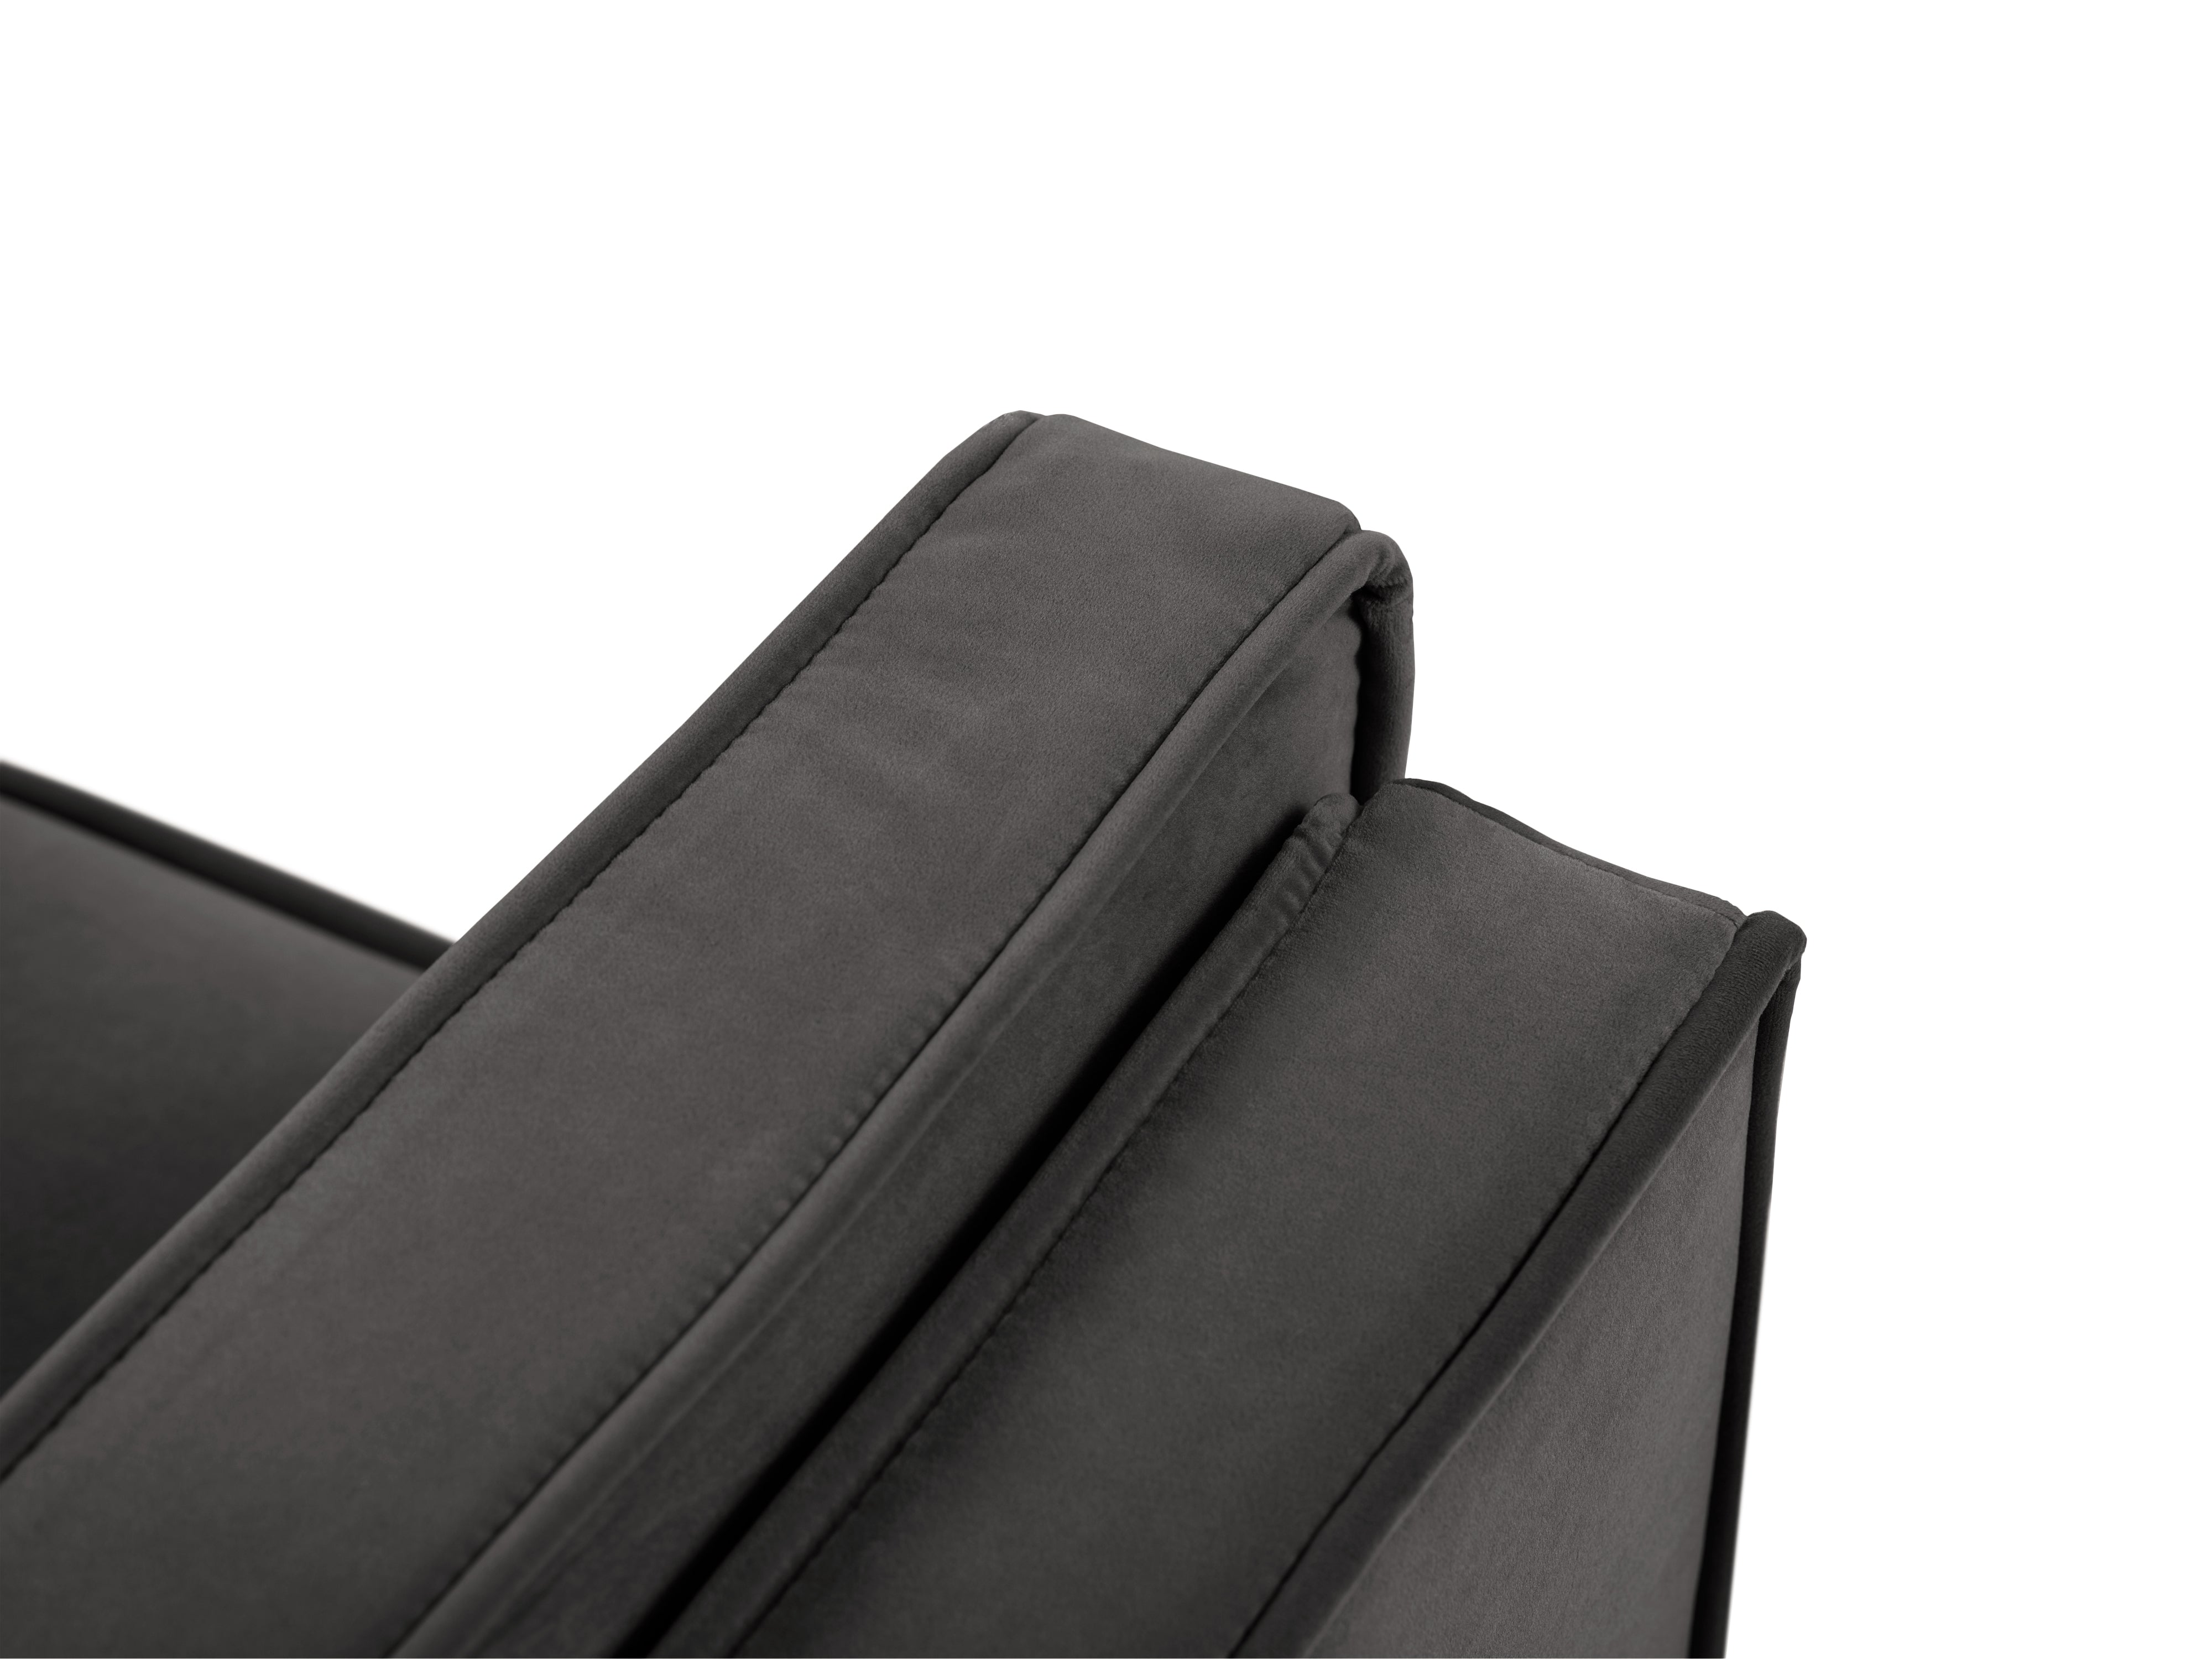 LUIS dark grey velvet 4-seater sofa with black base